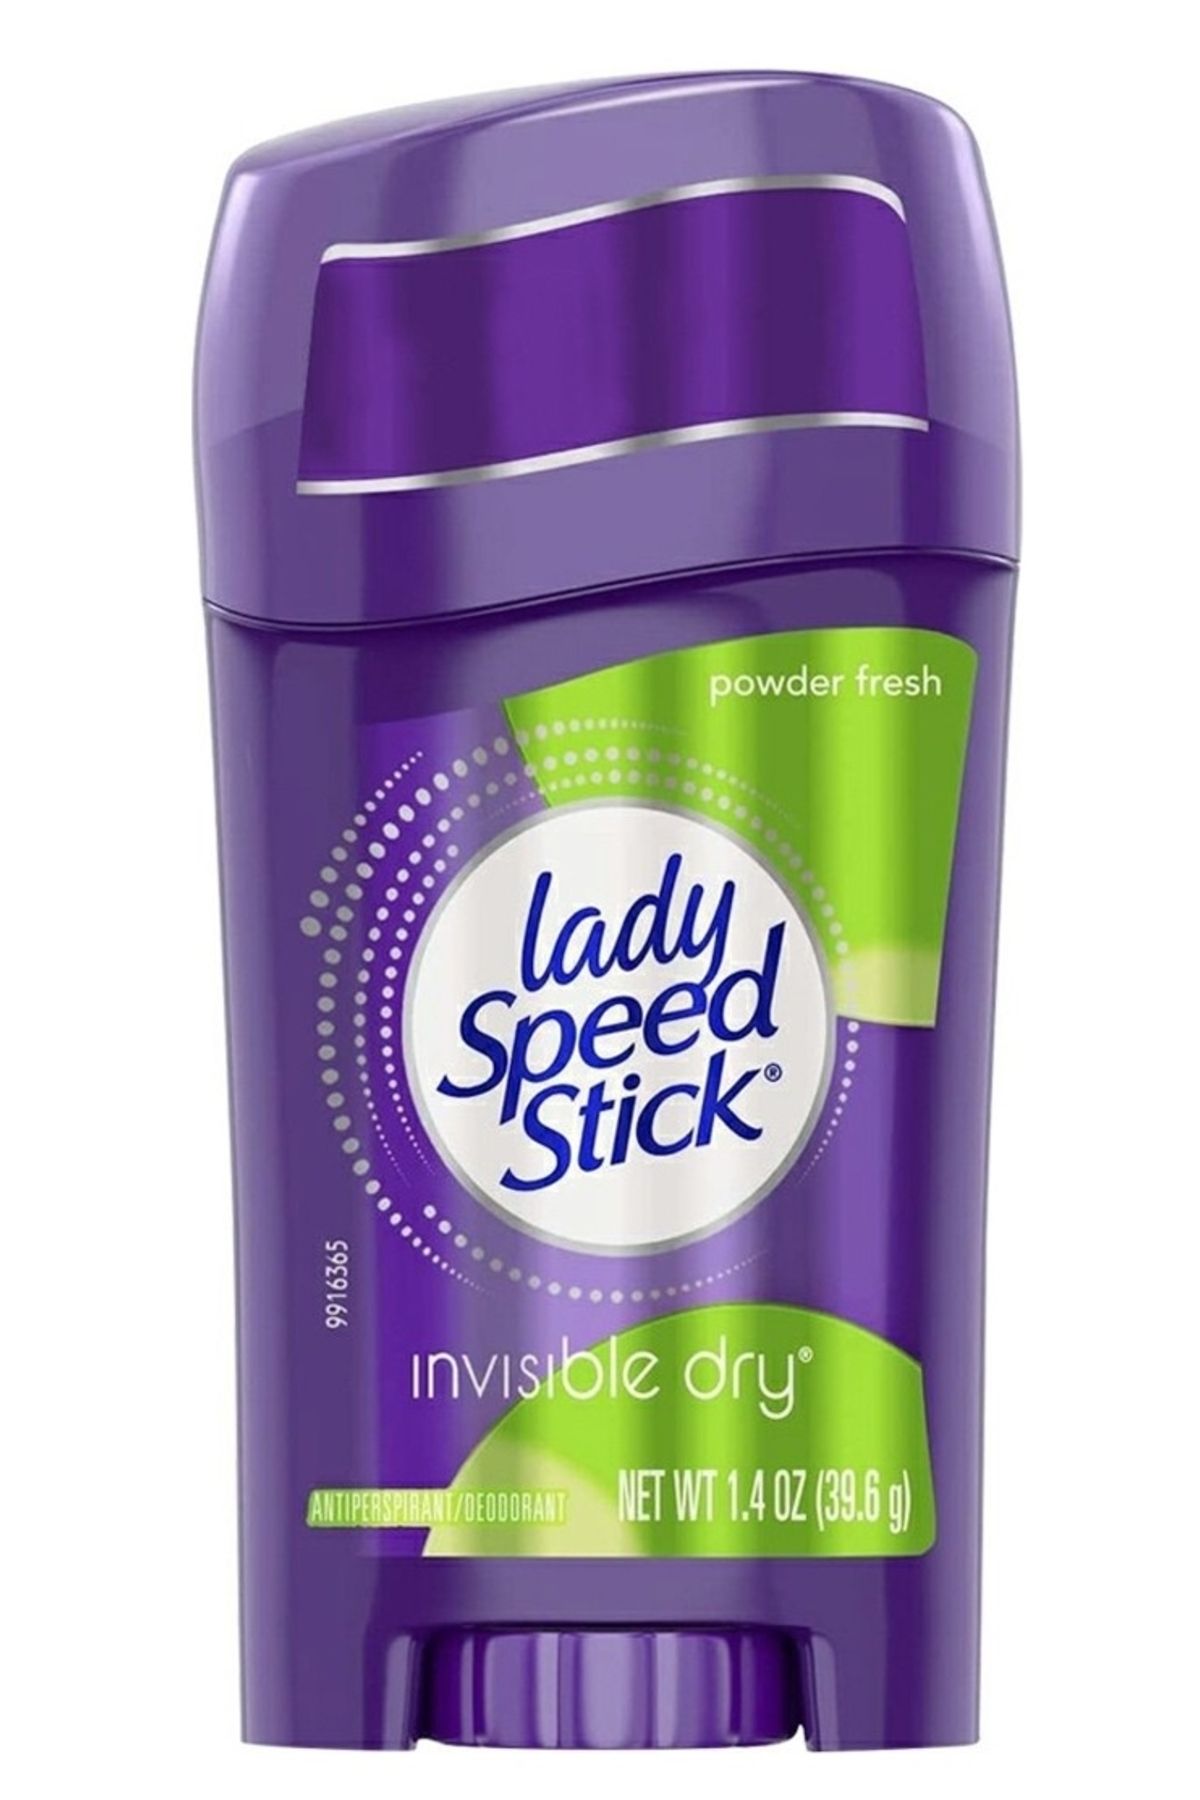 Lady Speed Stick Powder Fresh Deodorant 39.6 Grr